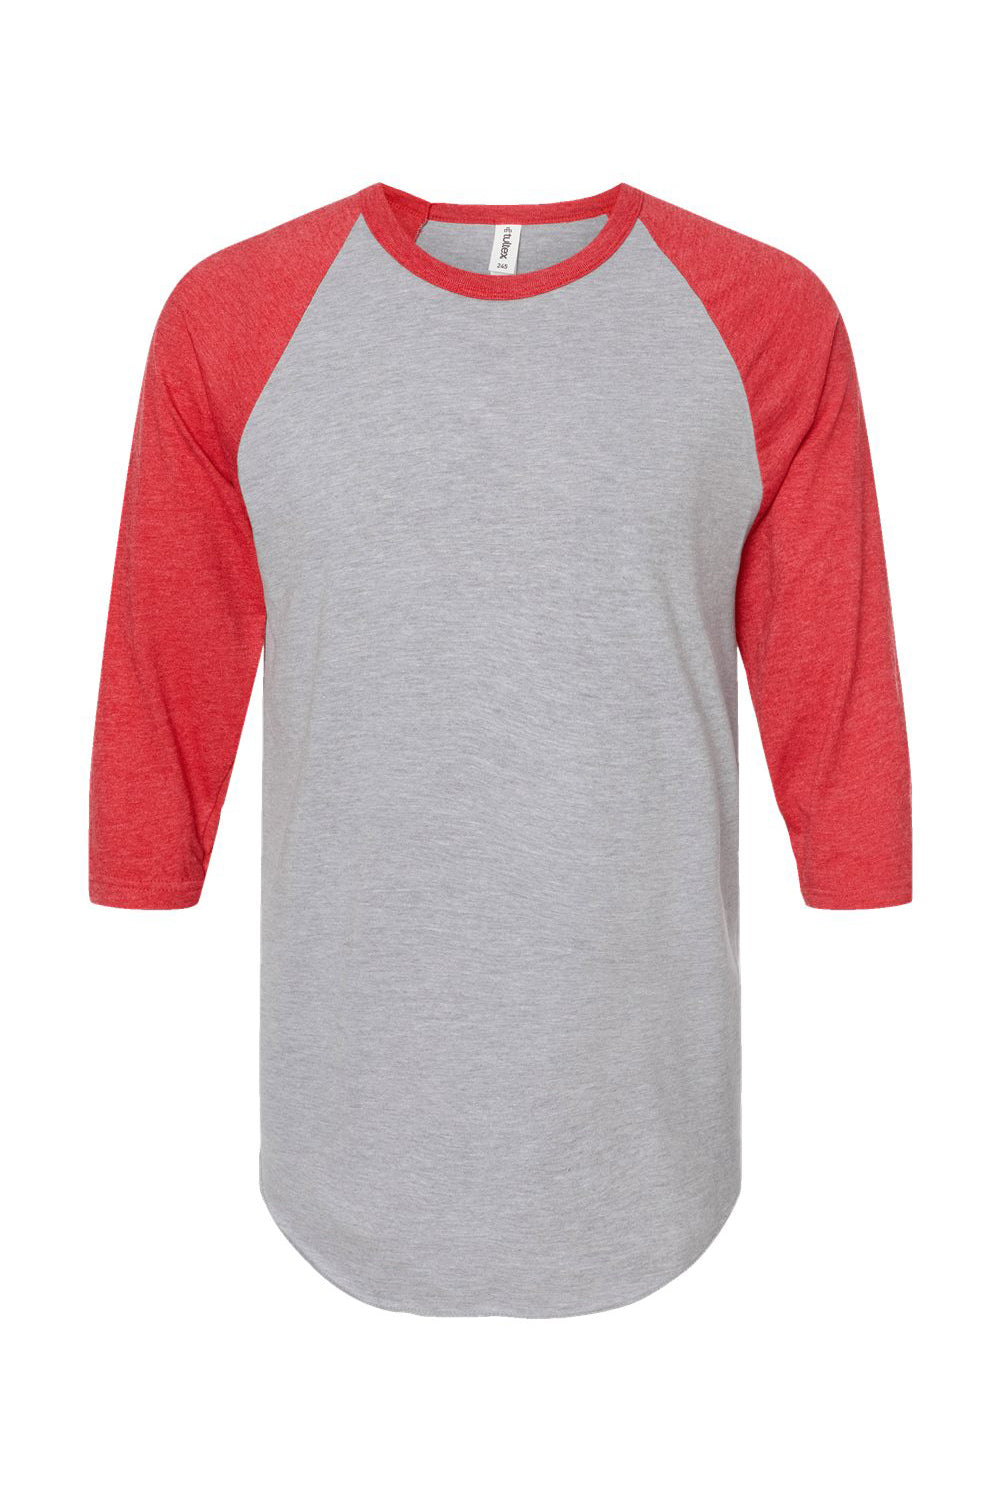 Tultex 245 Mens Fine Jersey Raglan 3/4 Sleeve Crewneck T-Shirt Heather Grey/Heather Red Flat Front